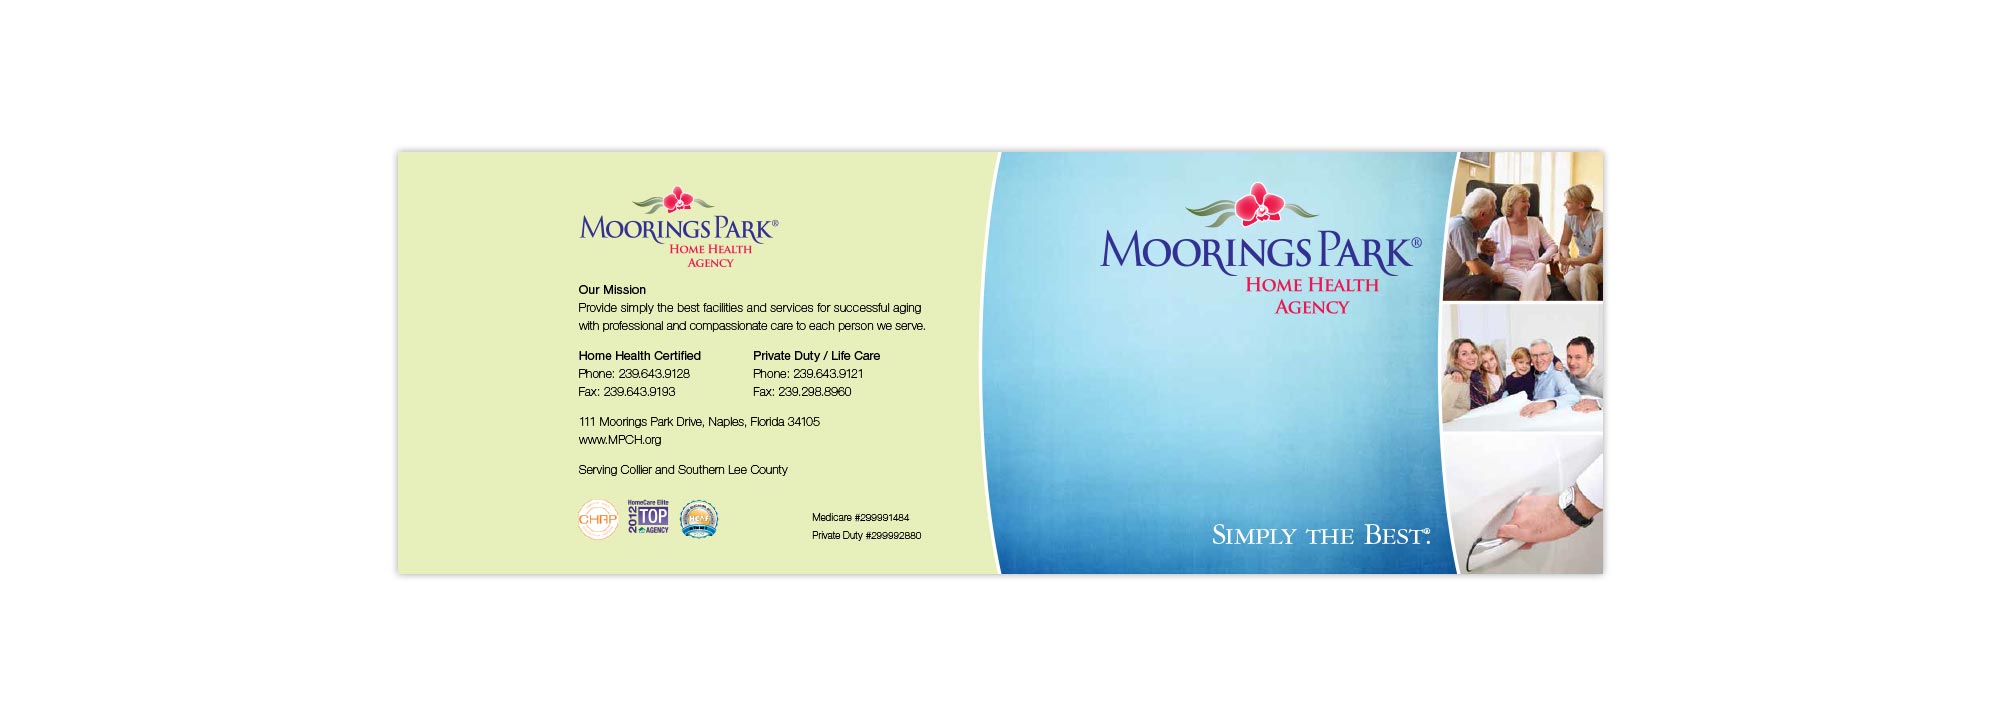 Moorings Park Home Health Agency Magazine